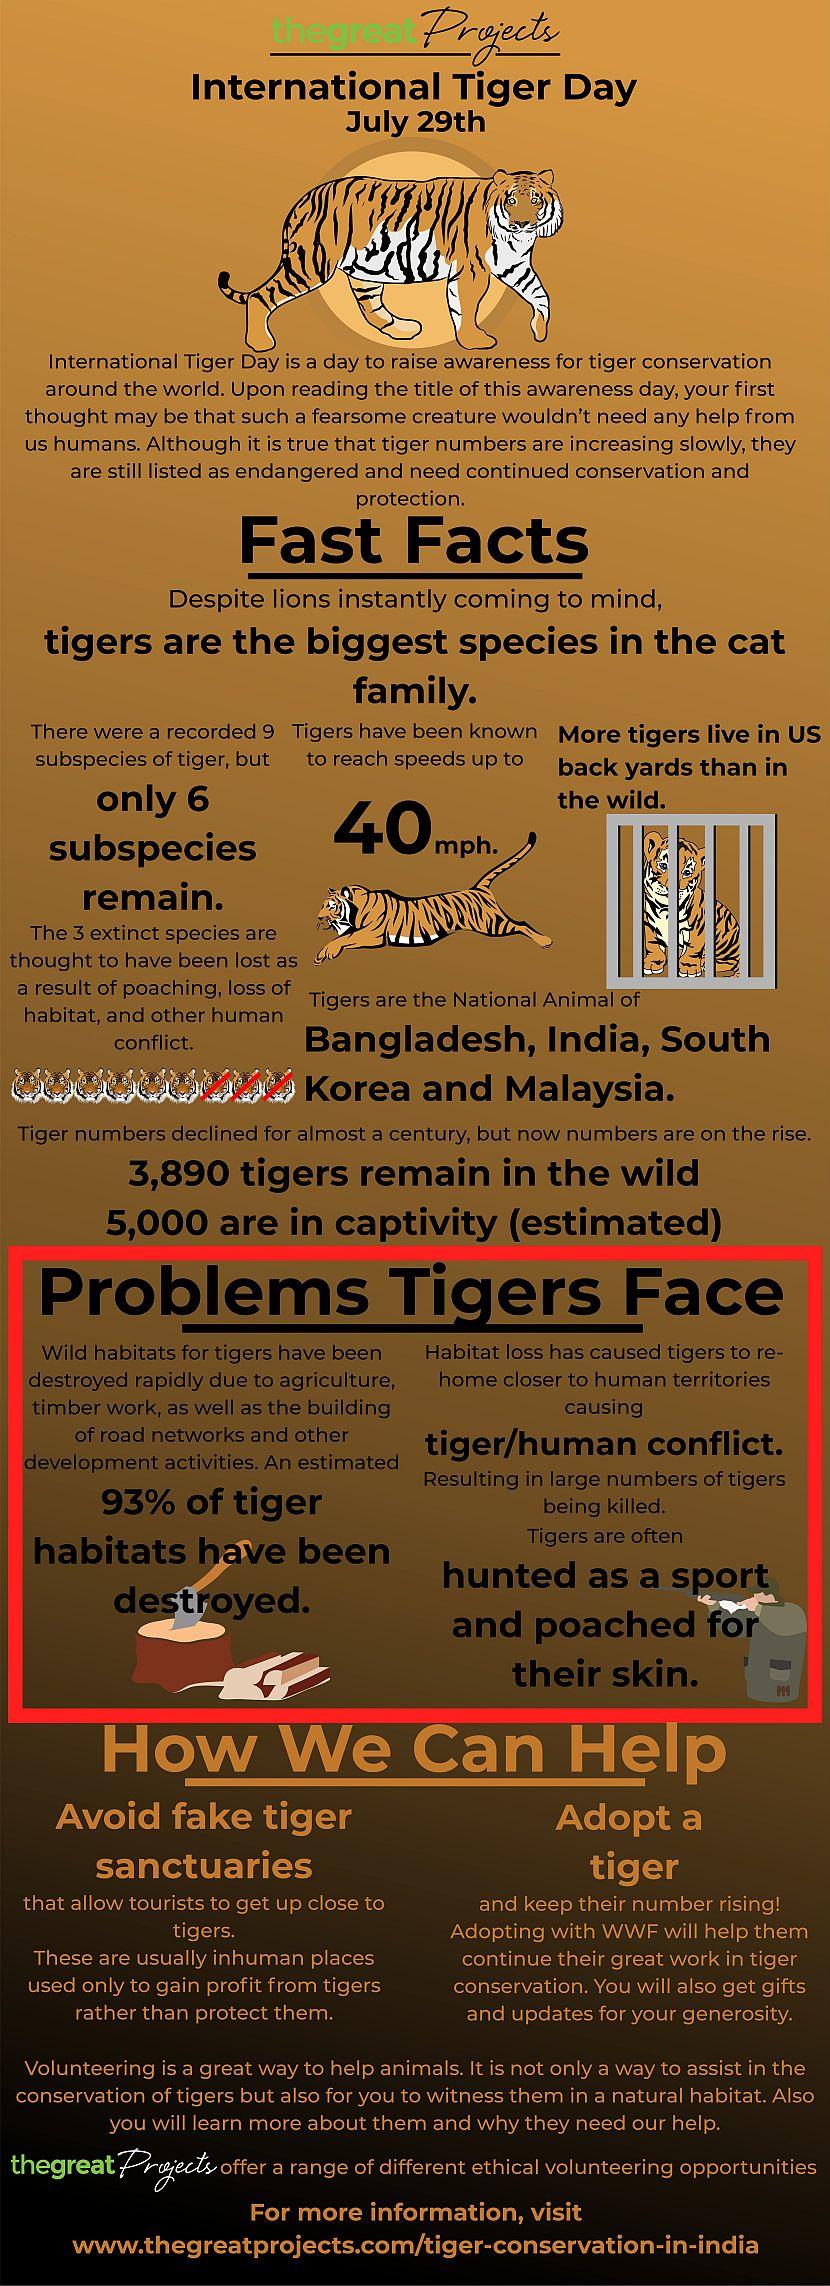 International Tiger Day infographic